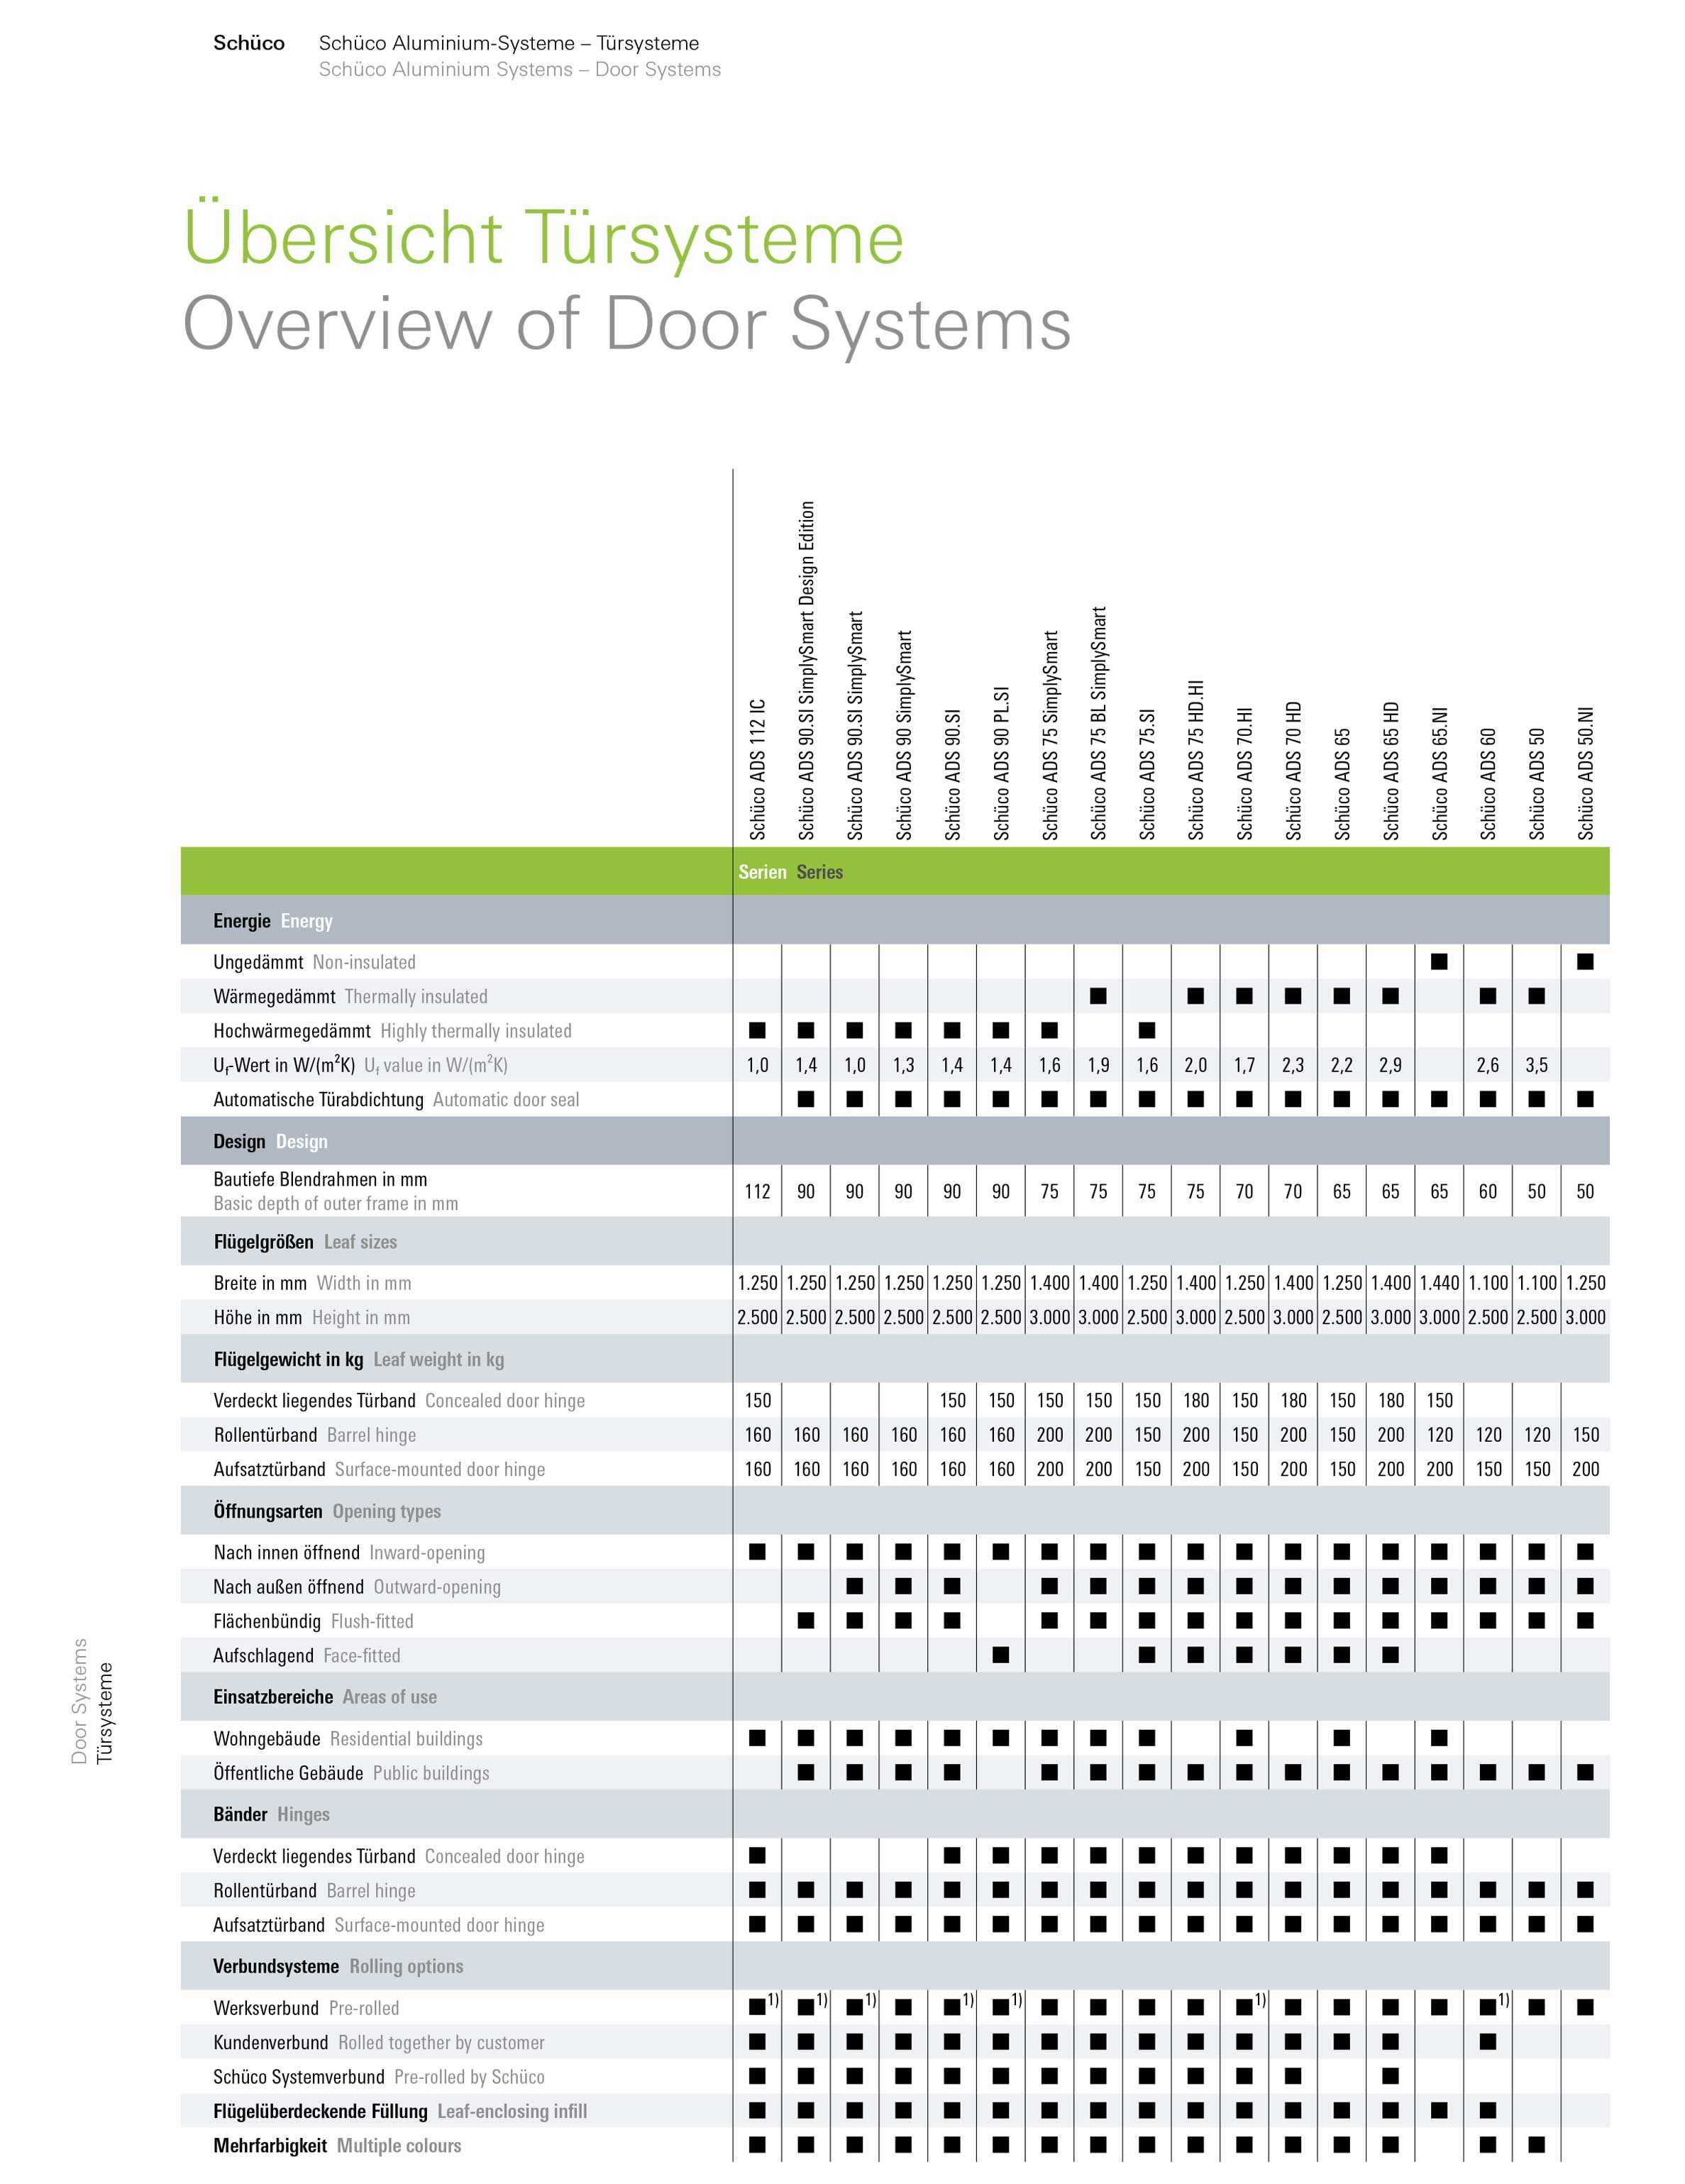 Overview of Door Systems